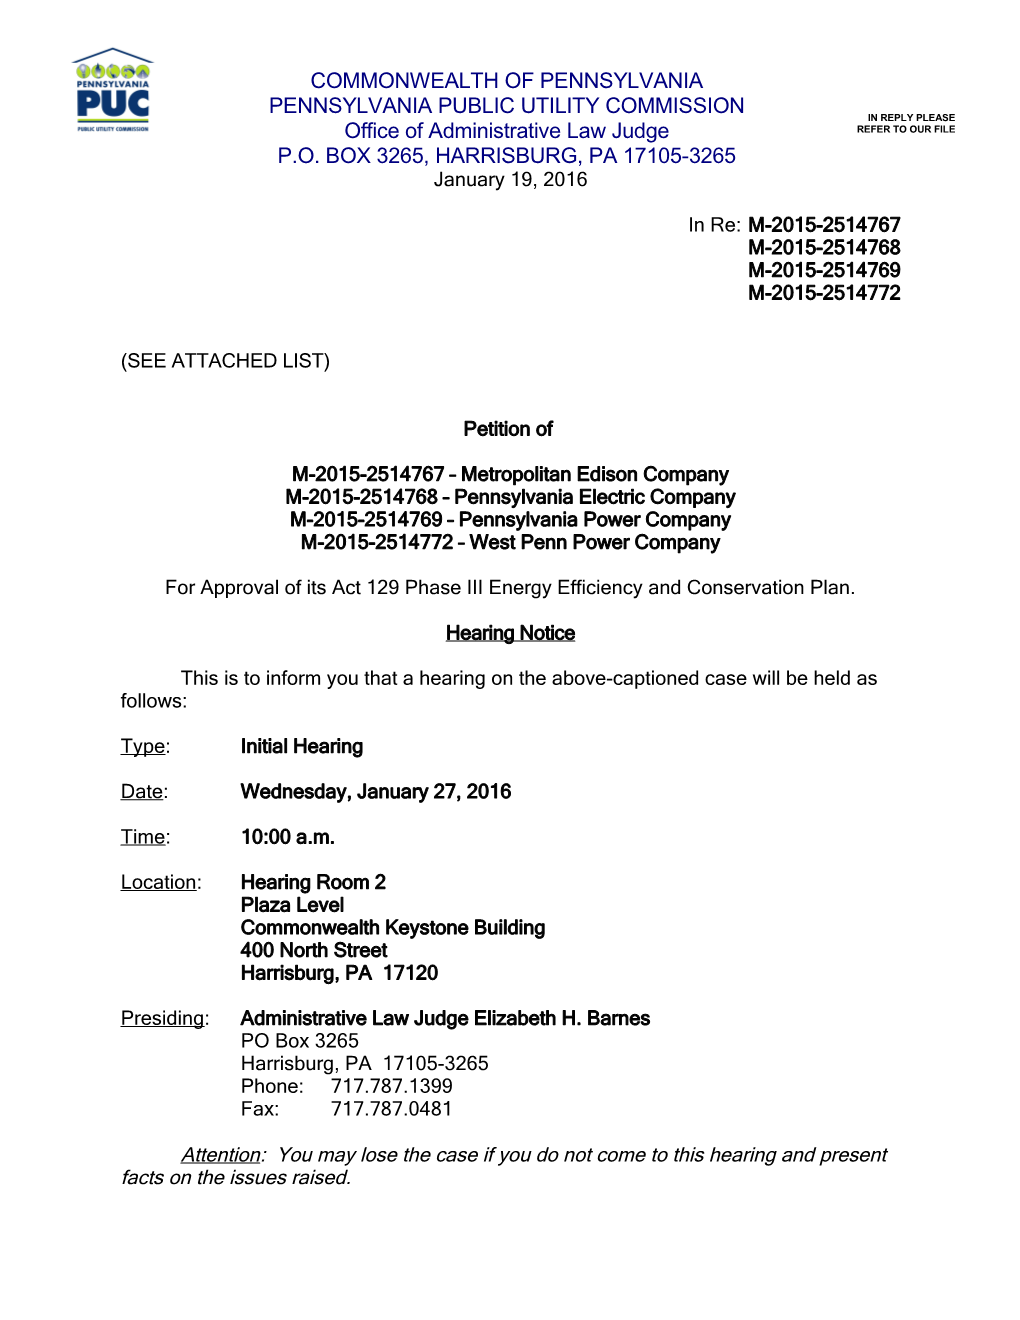 Harrisburg Hearing Notice s3